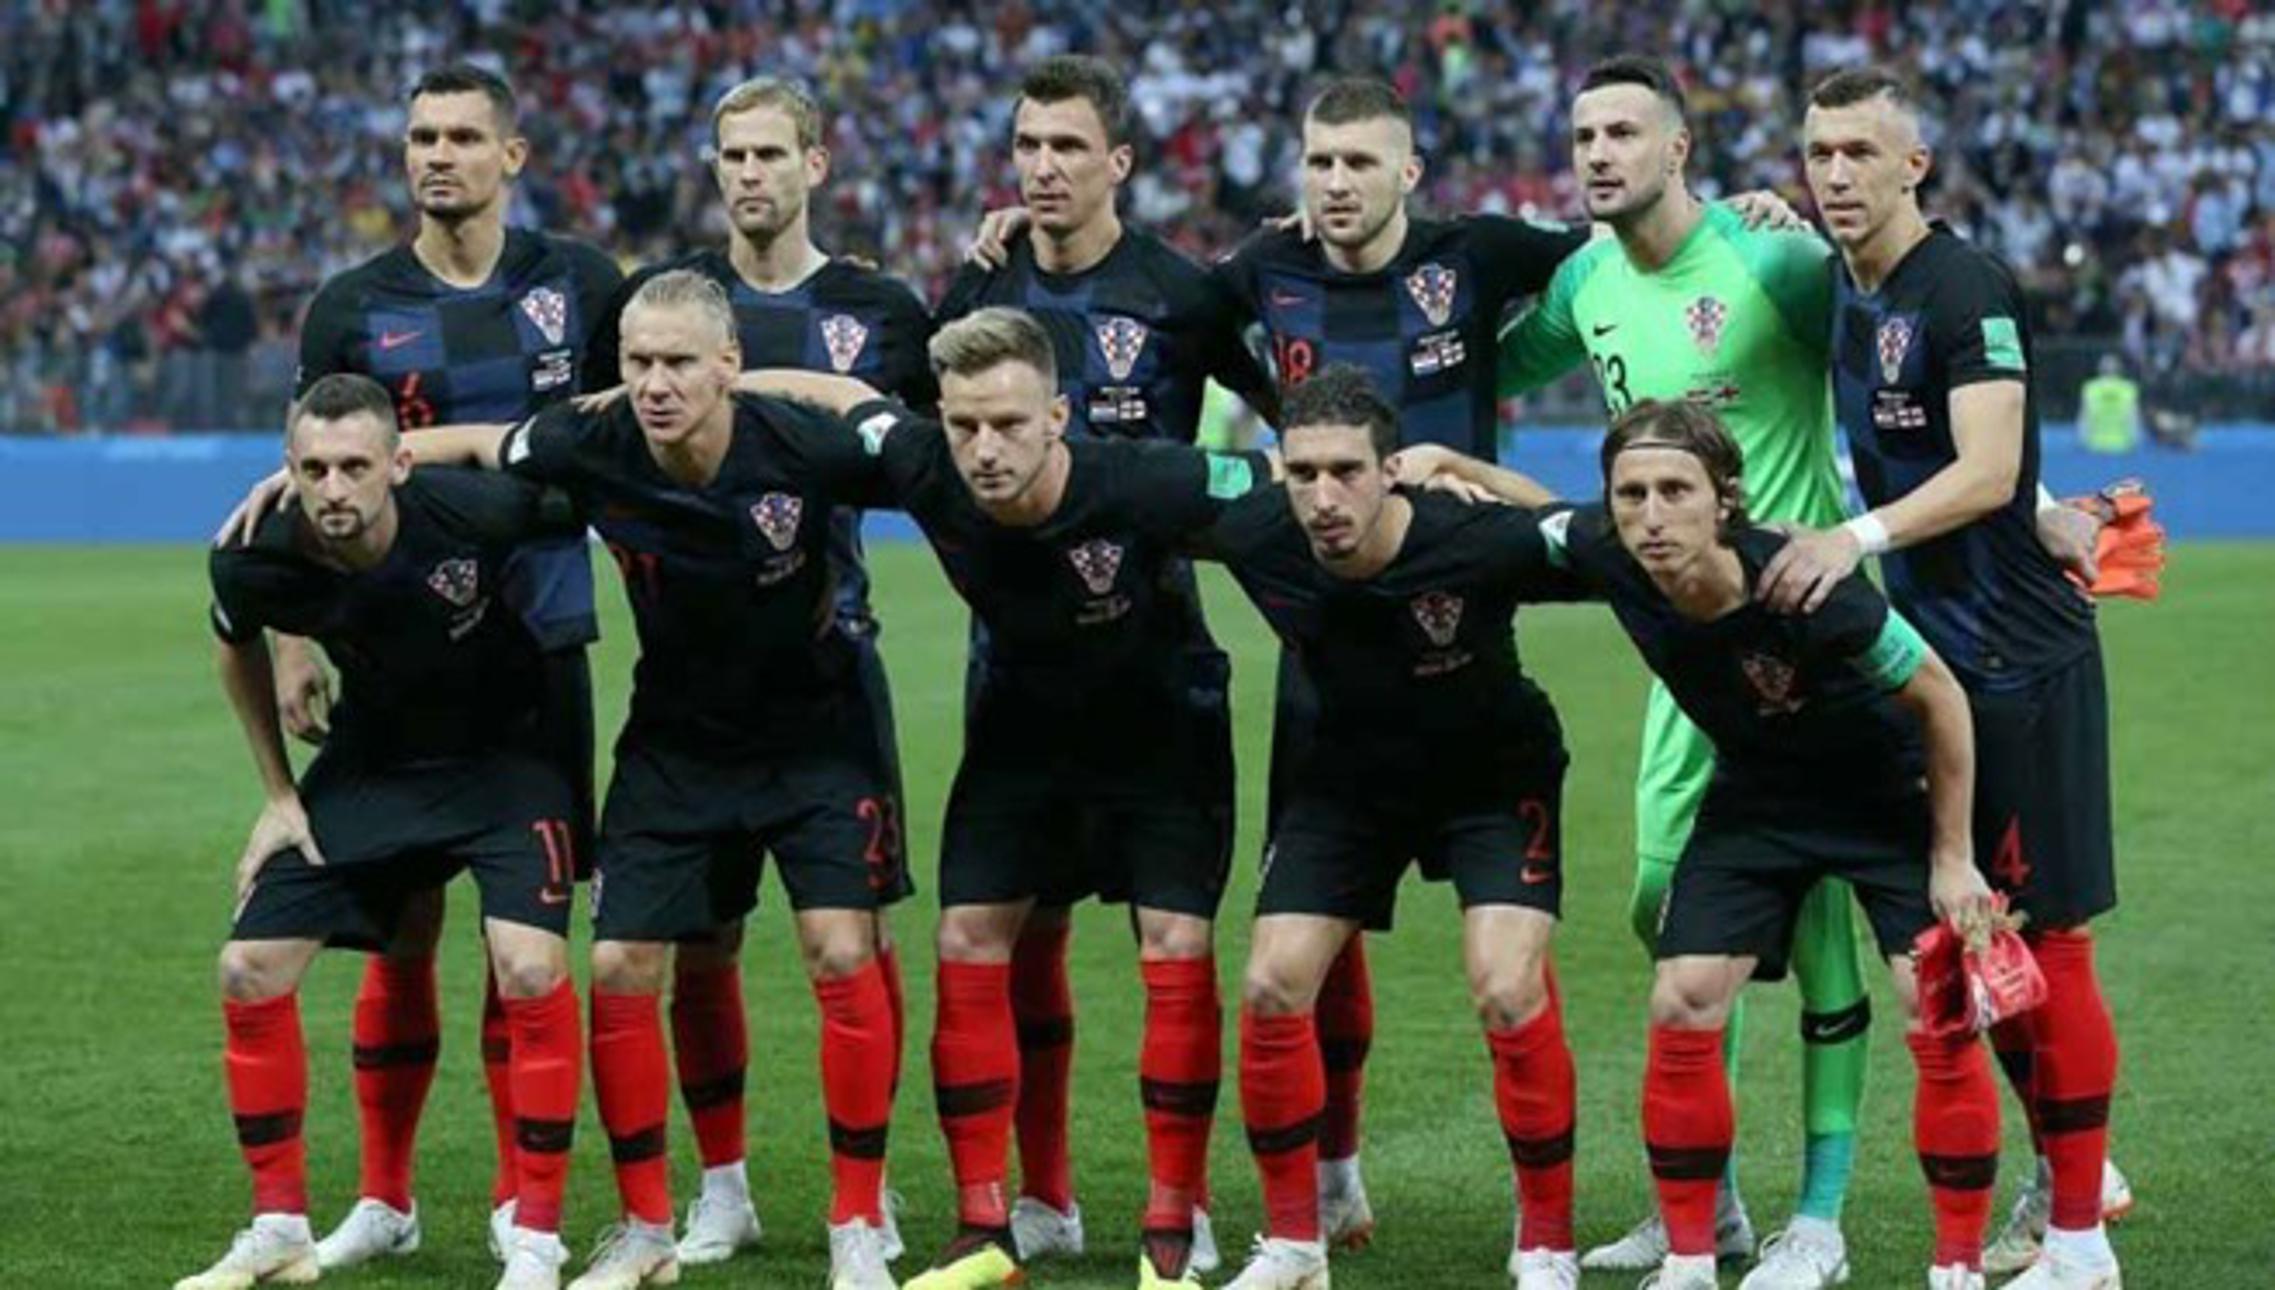 Nogometna reprezentacija Hrvatske